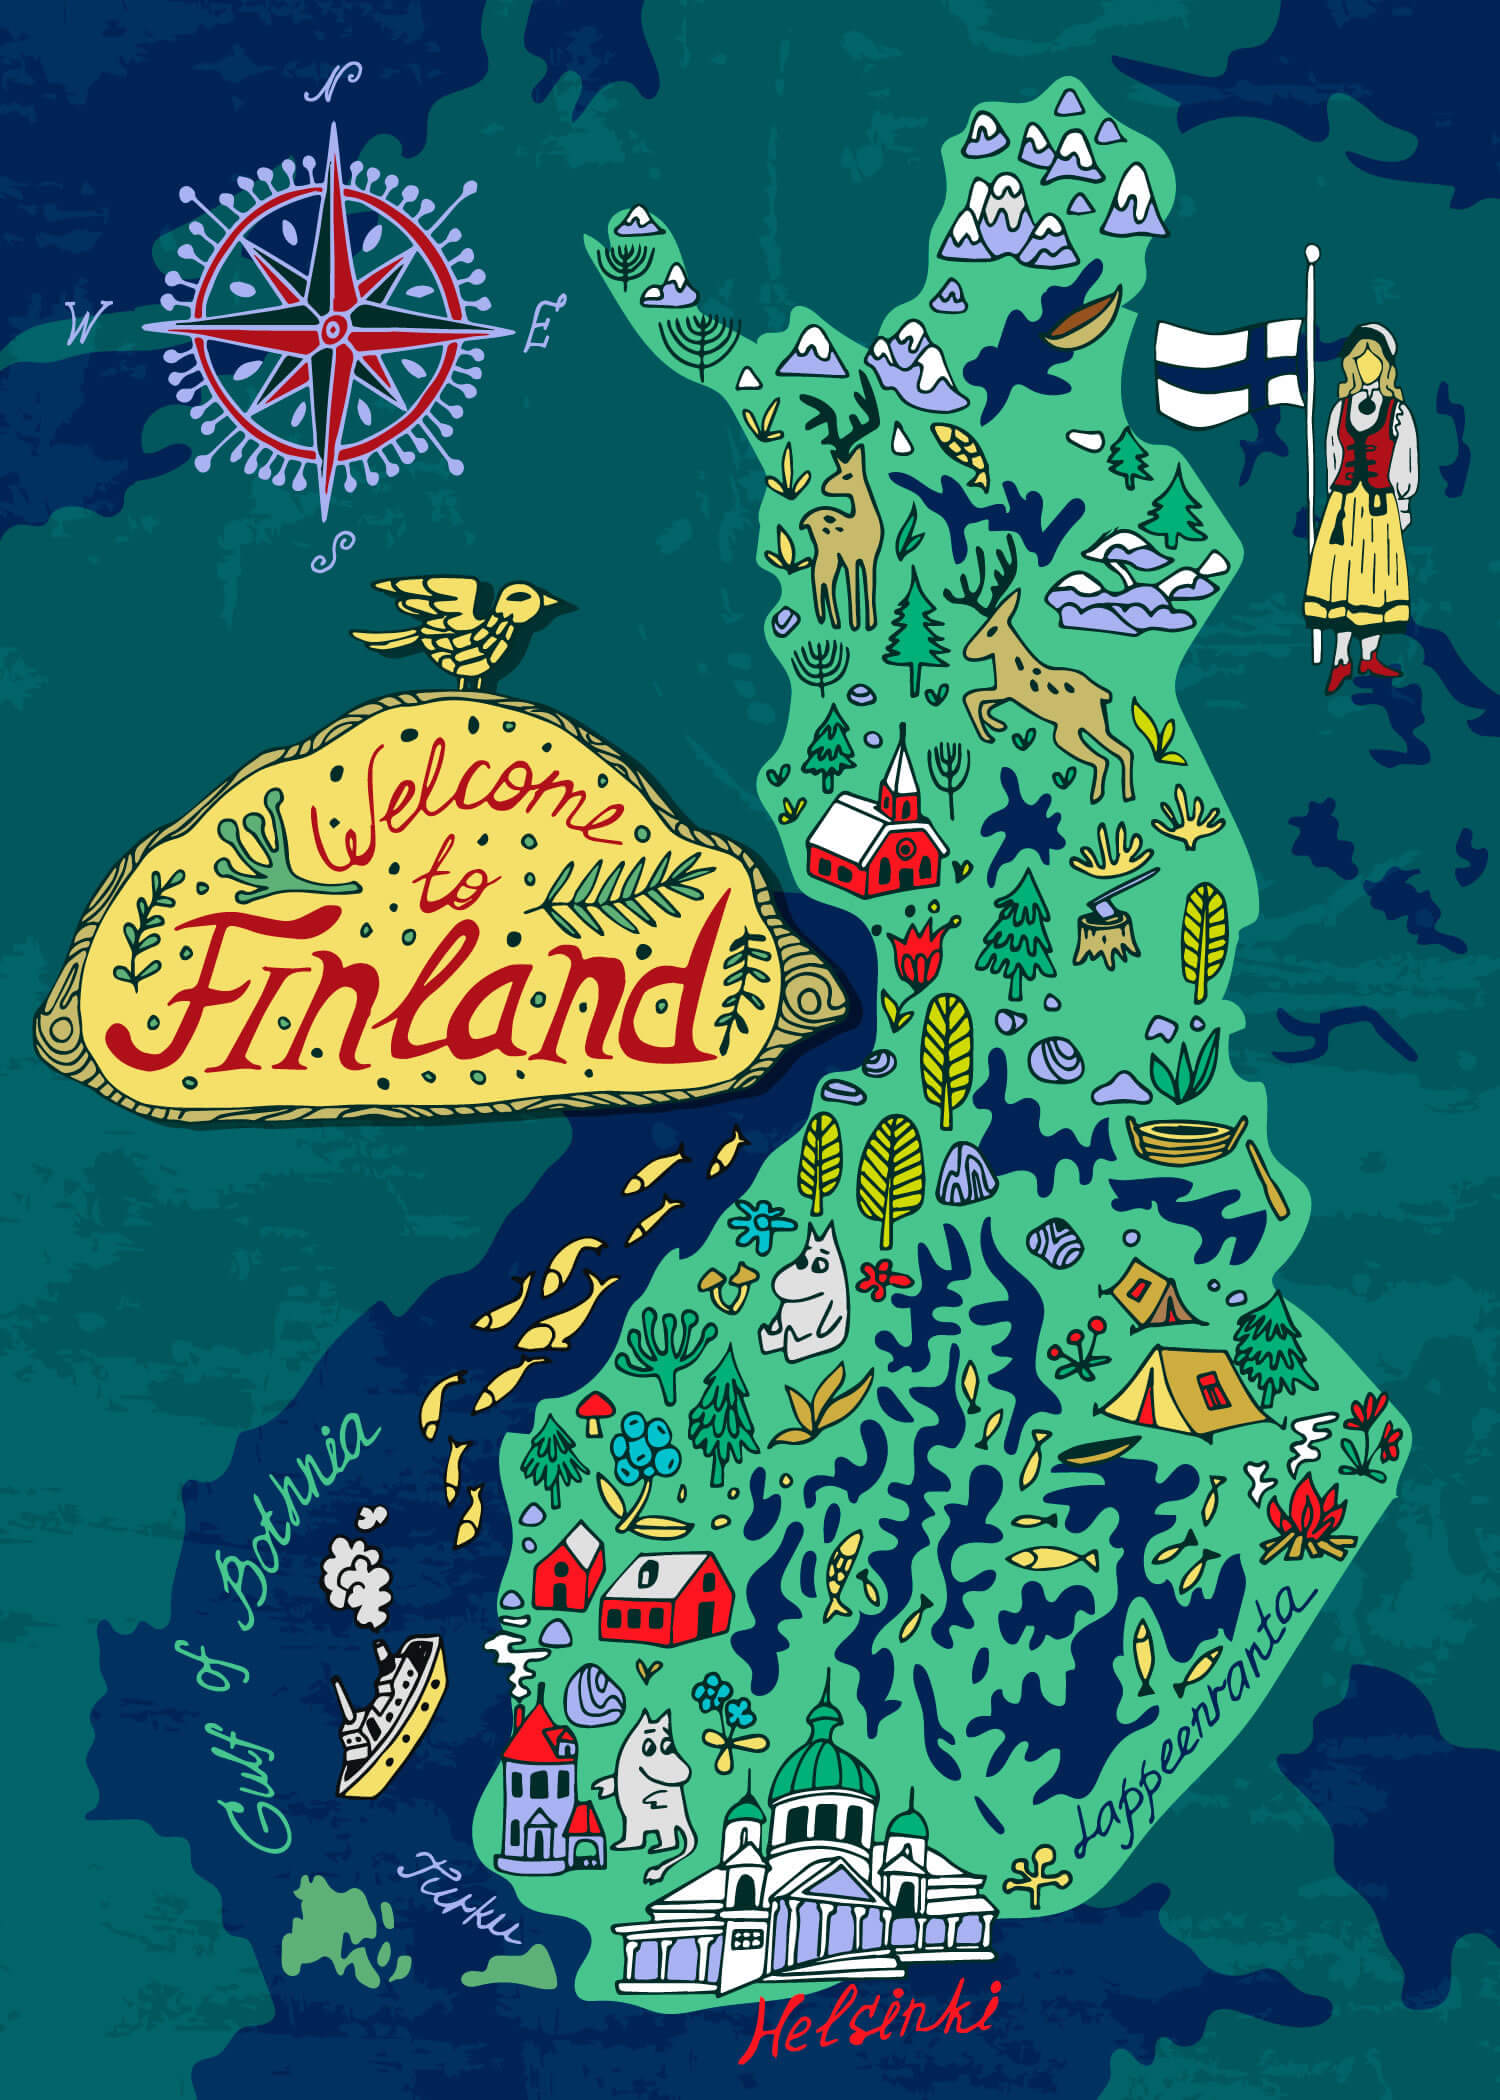 finland tourism info